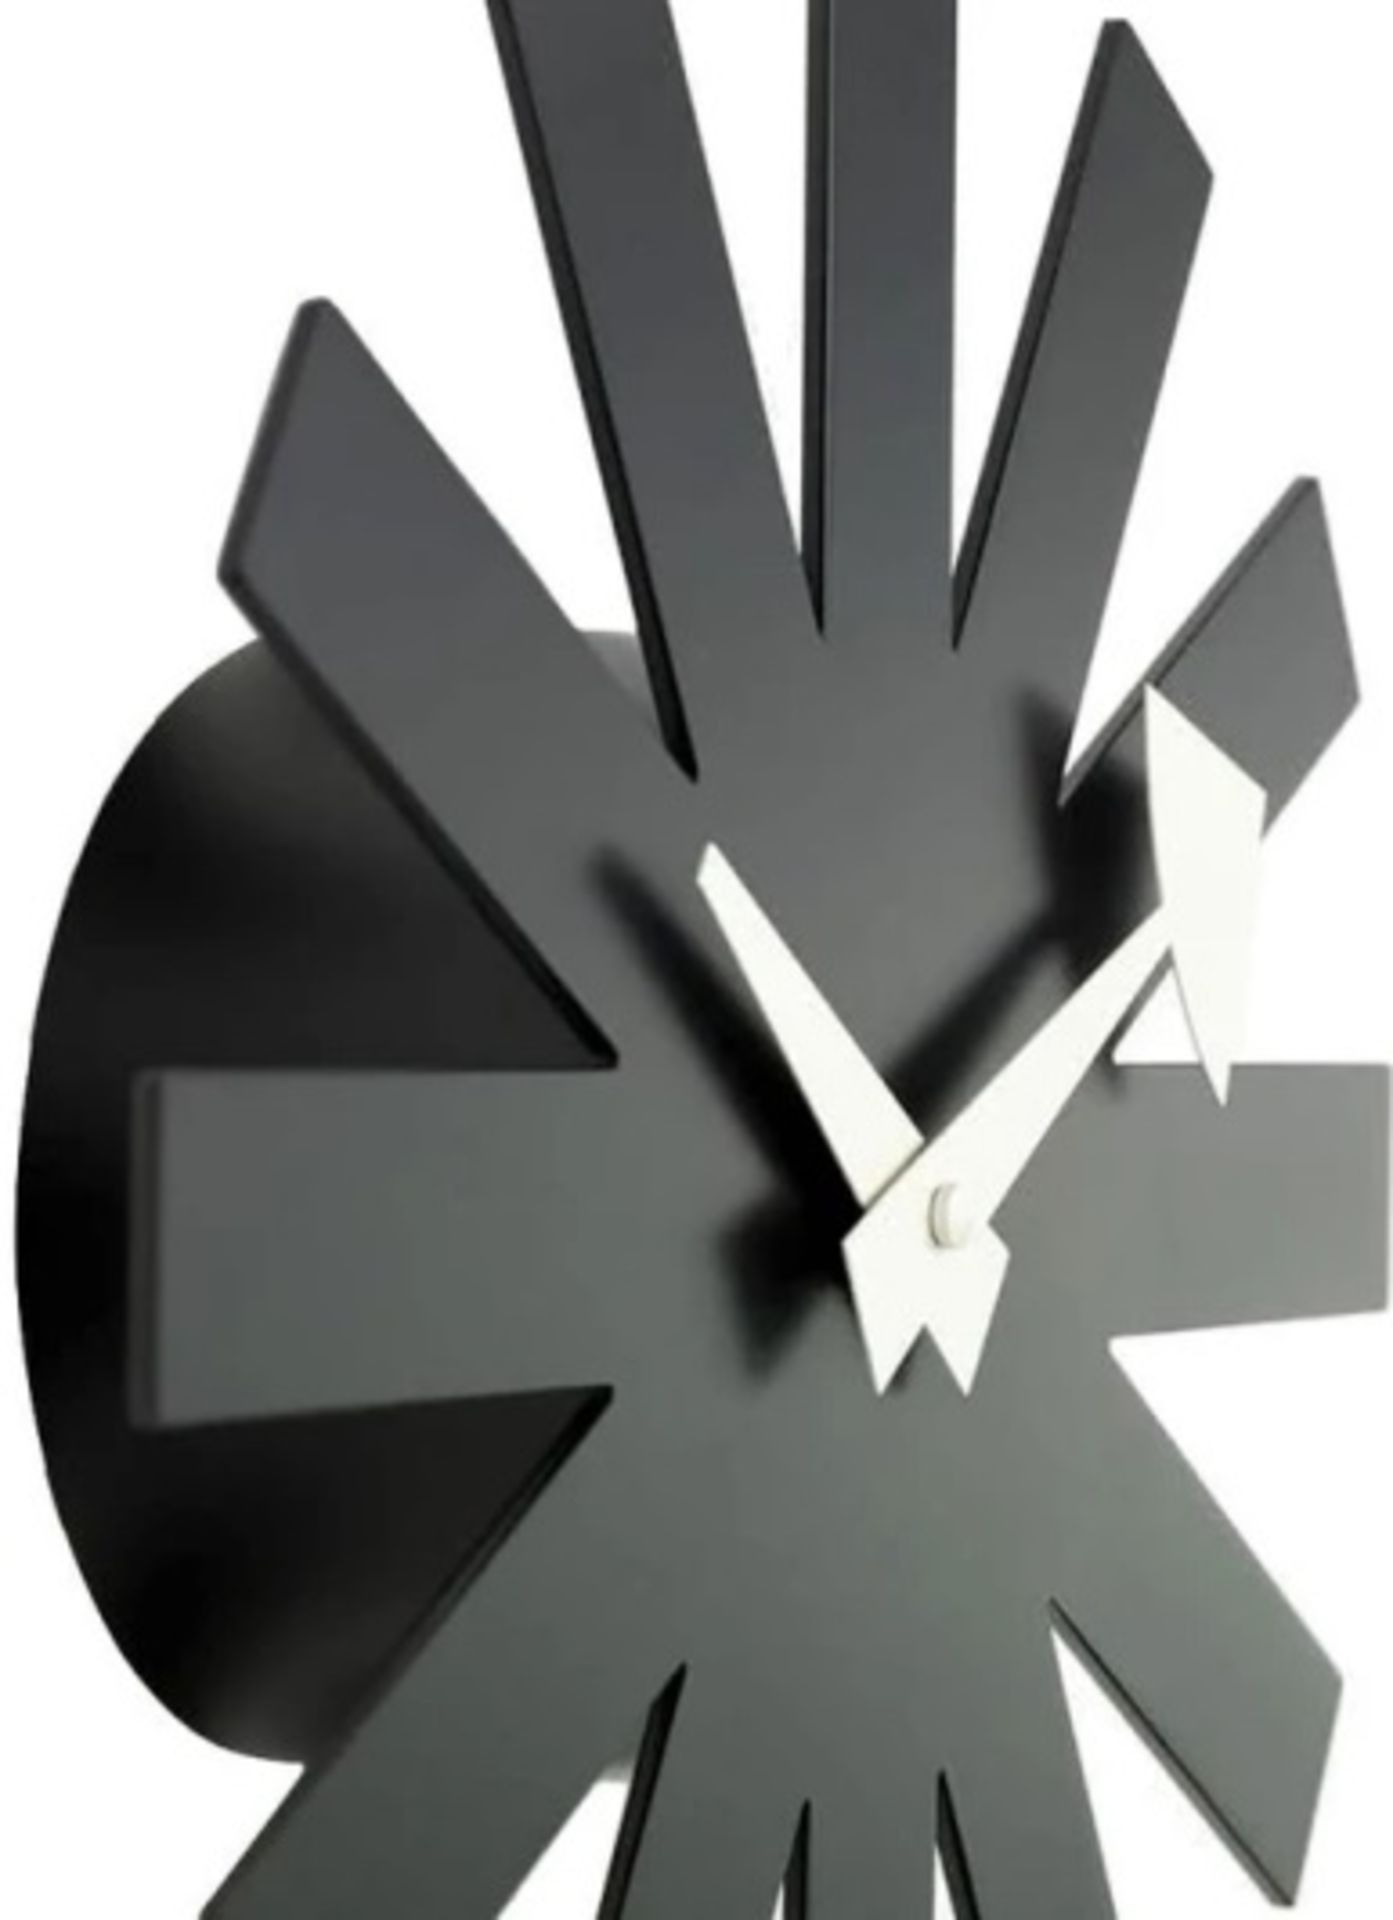 1 x George Nelson Inspired Black Asterisk Clock - 25cm Diameter - Brand New Boxed Stock - Image 3 of 3